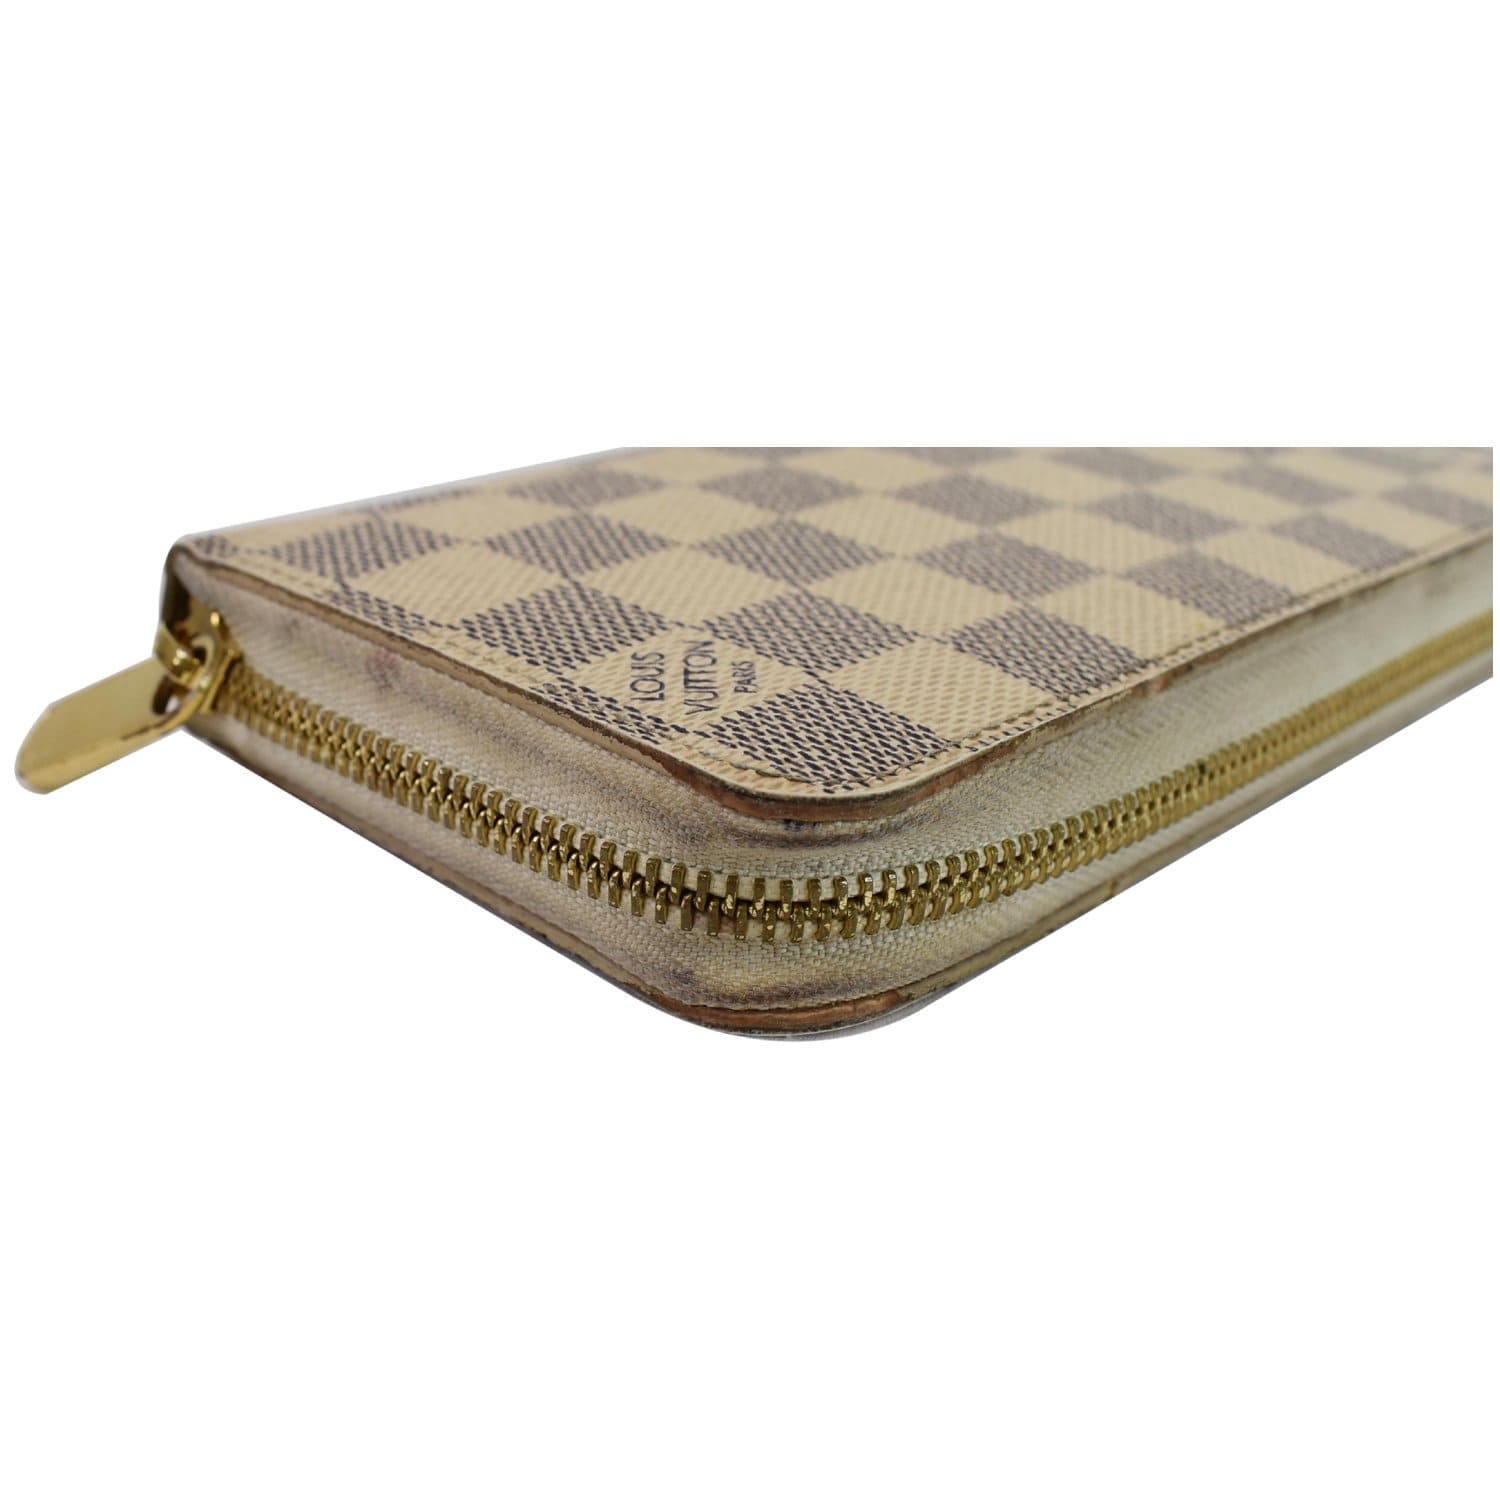 Auth Louis Vuitton Damier Azur Zippy Wallet N63503 Long Wallet